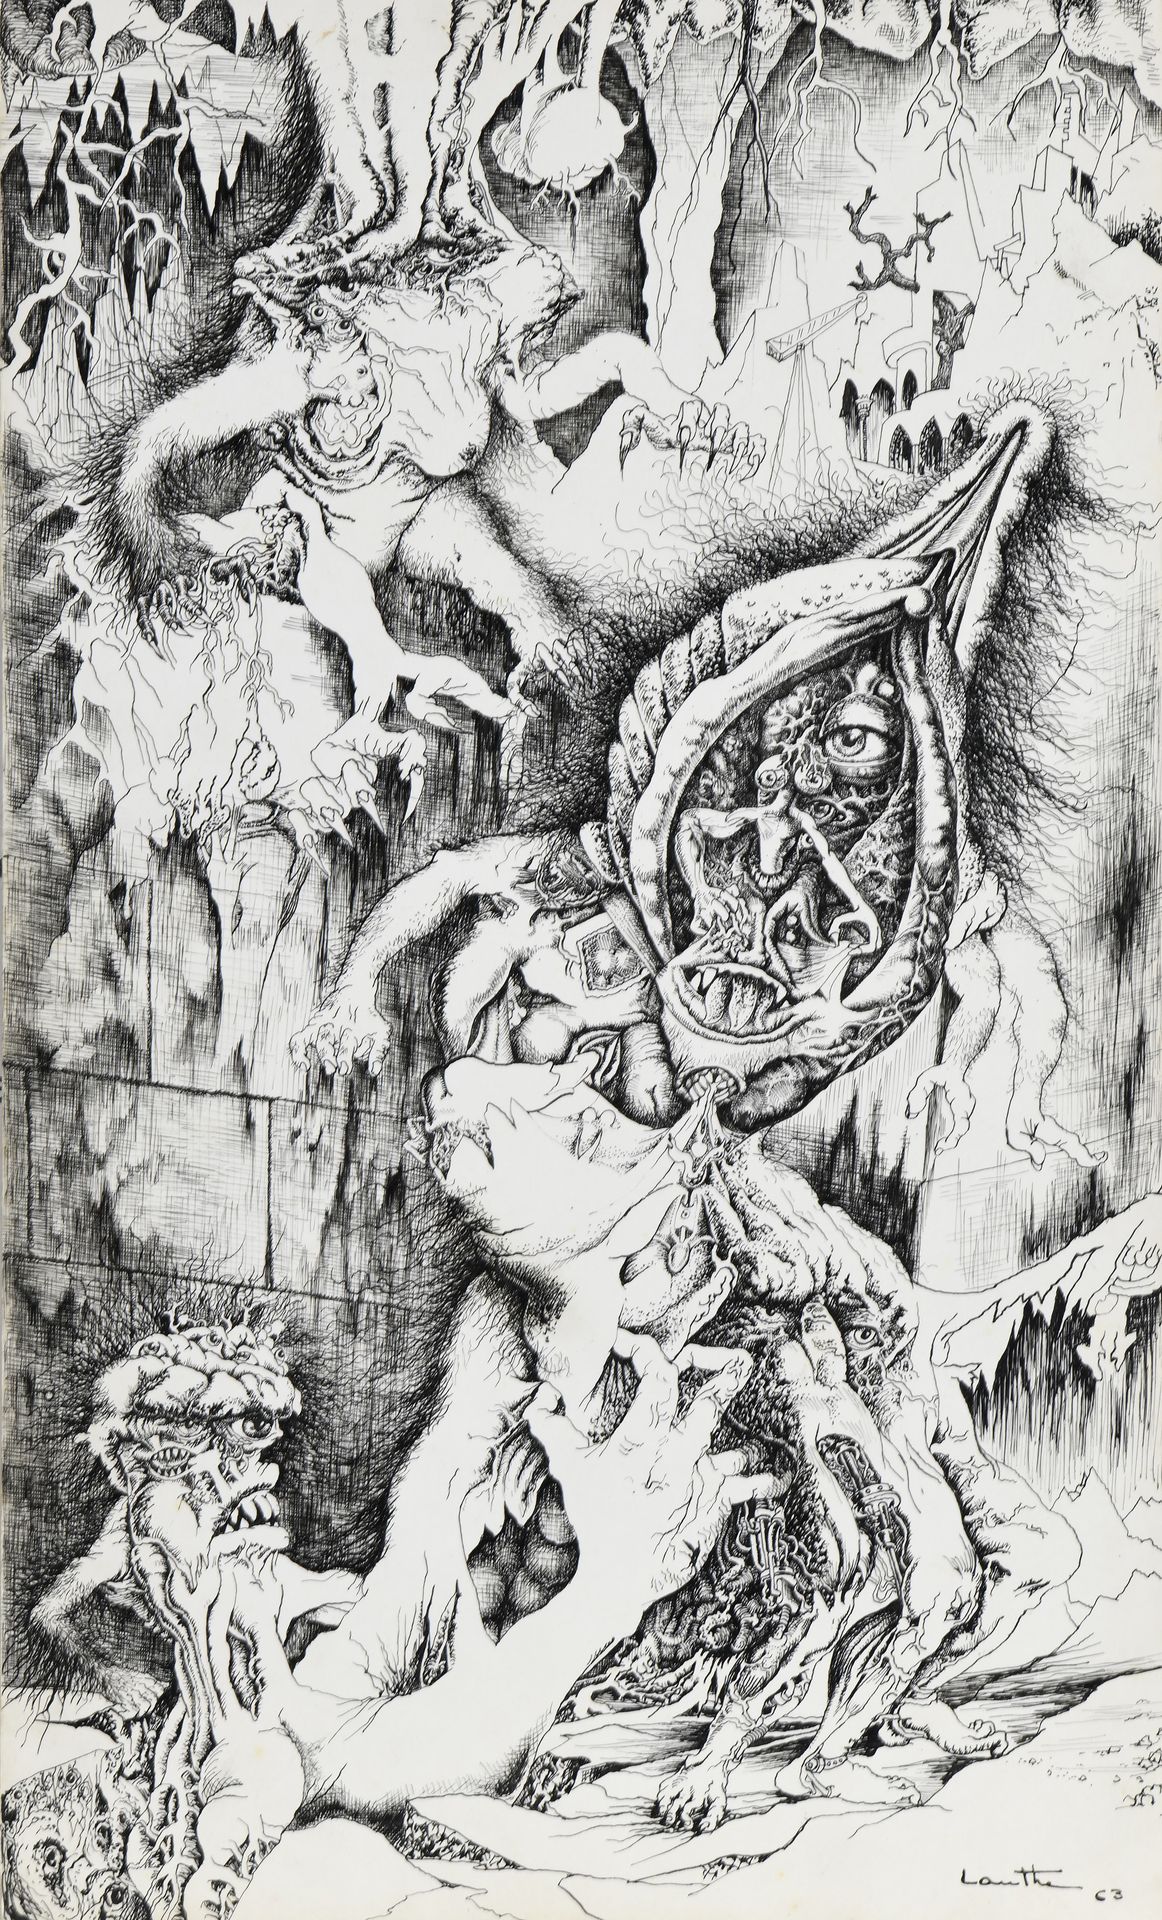 Null Jean LAUTHE (1918-1982)
无题》，1963年
纸板上的水墨画（钢笔），右下角有签名和日期。
46,5 x 28 cm